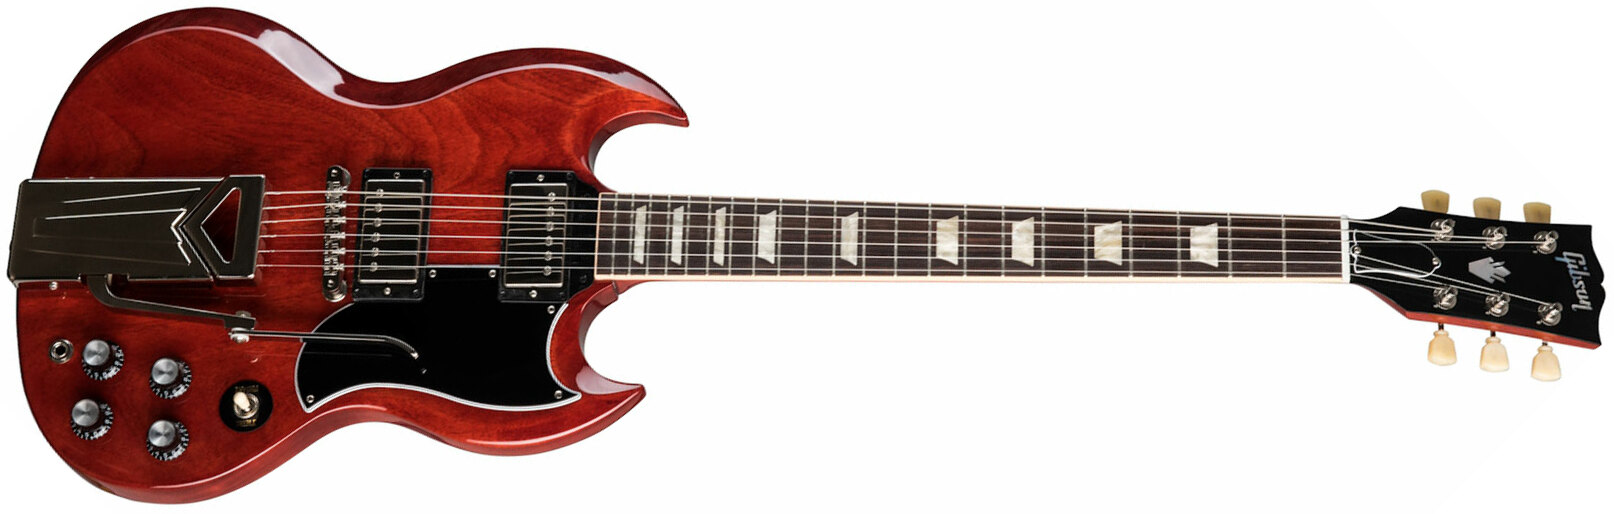 Gibson Sg Standard '61 Sideways Vibrola Original 2h Ht Rw - Vintage Cherry - Guitarra electrica retro rock - Main picture